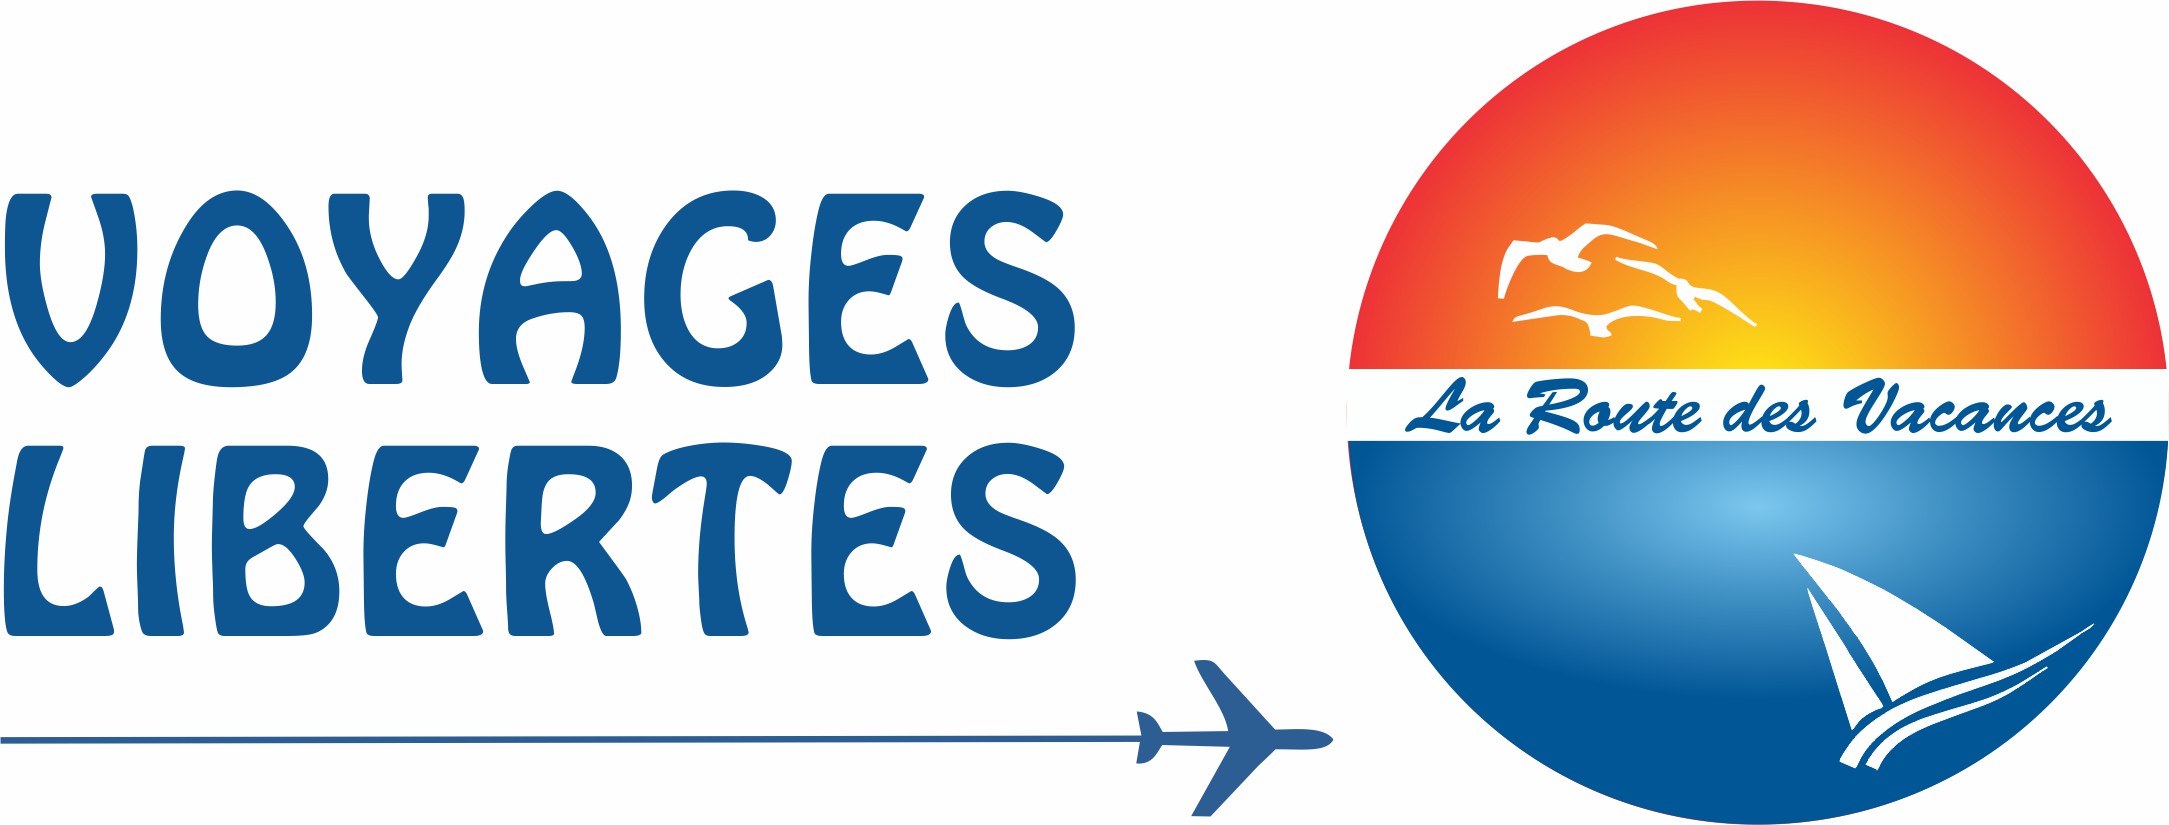 İpekyolu Turizm- Voyages Libertes